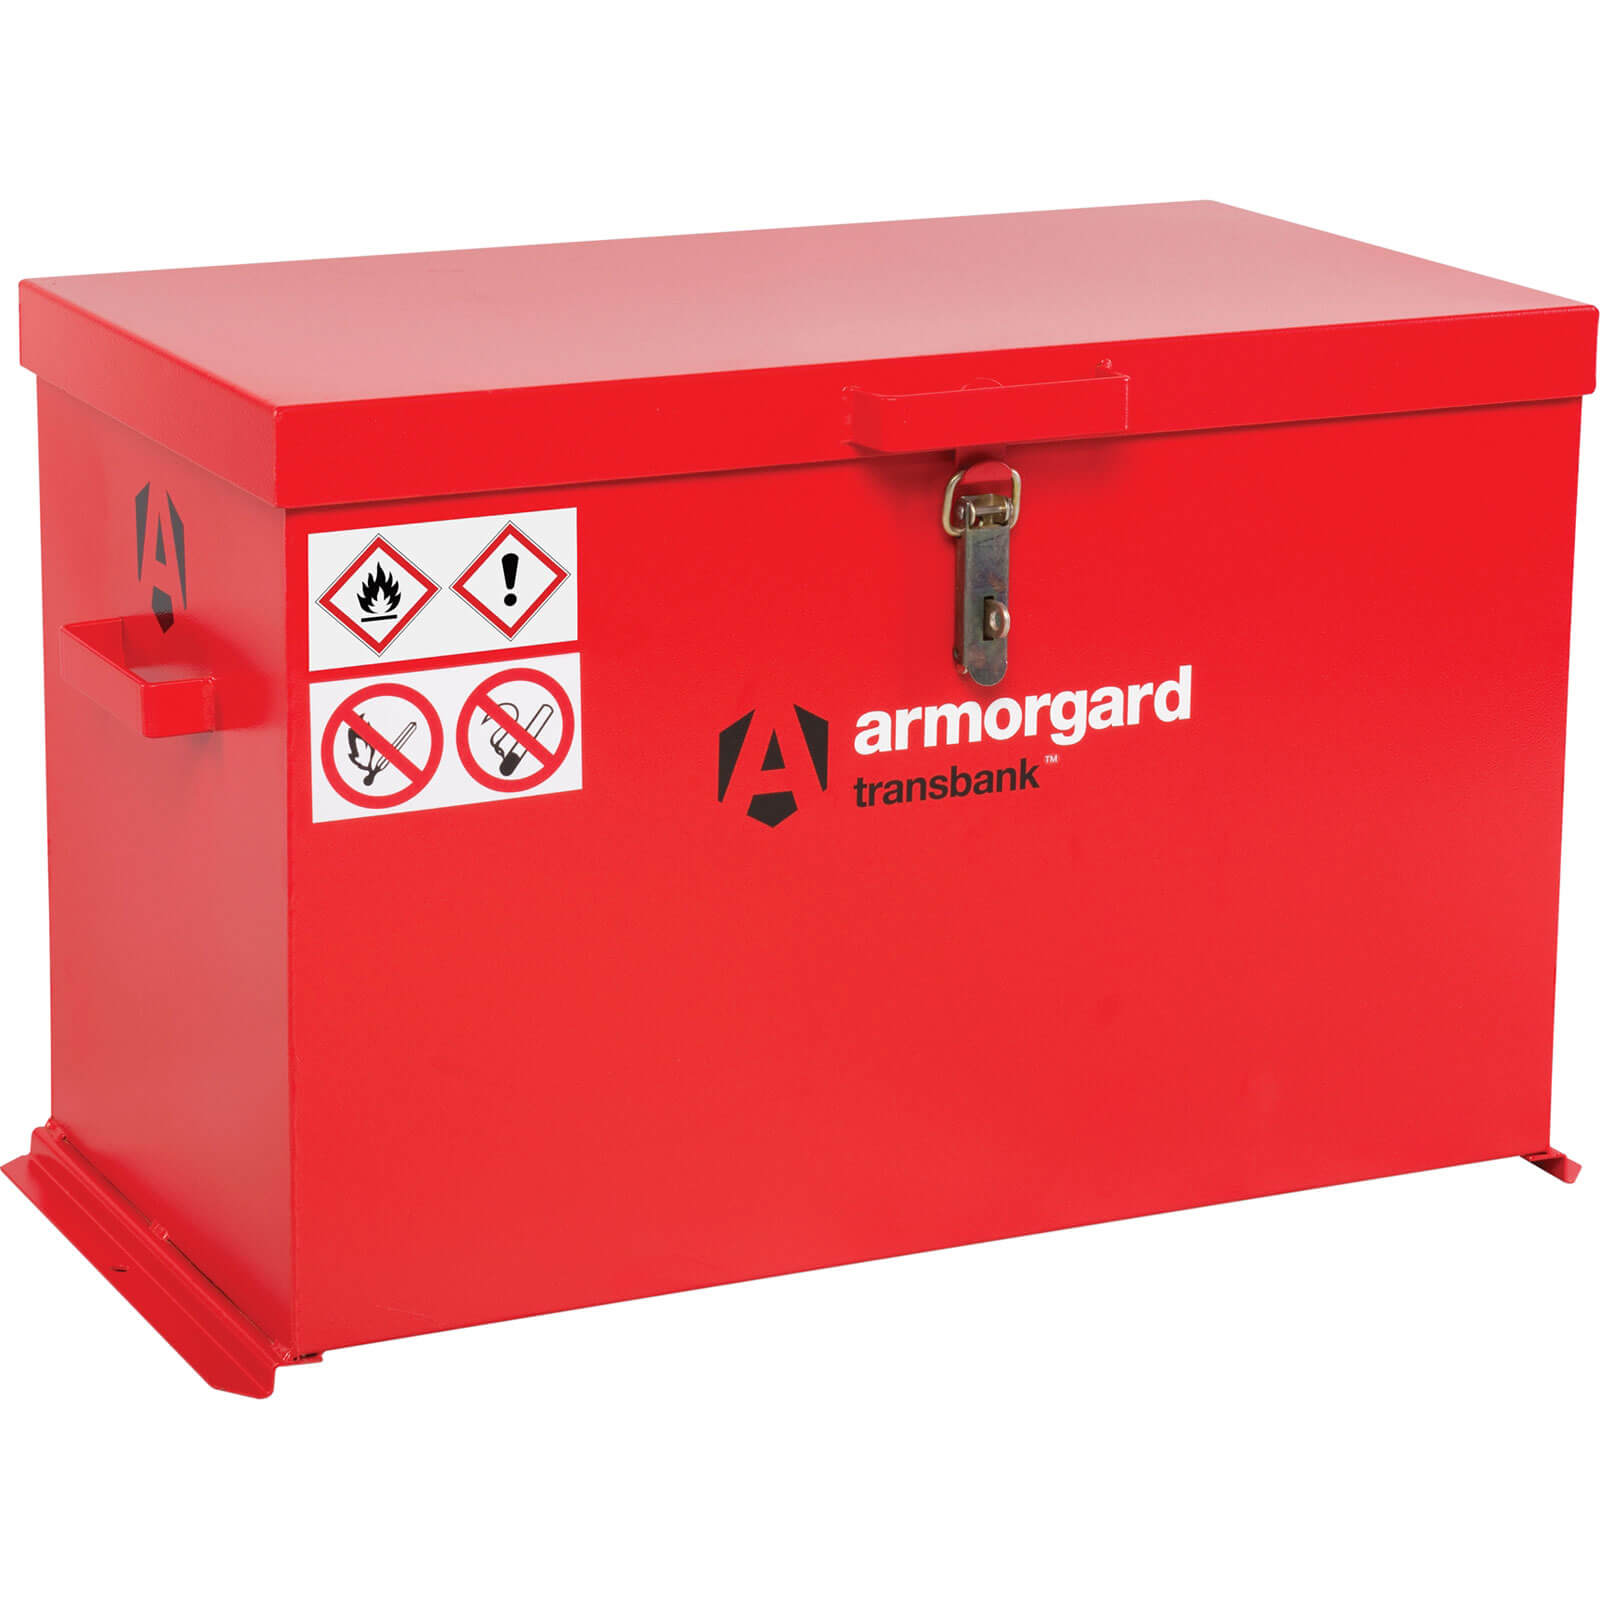 Image of Armorgard Transbank Hazardous Goods Secure Storage Box 880mm 485mm 540mm